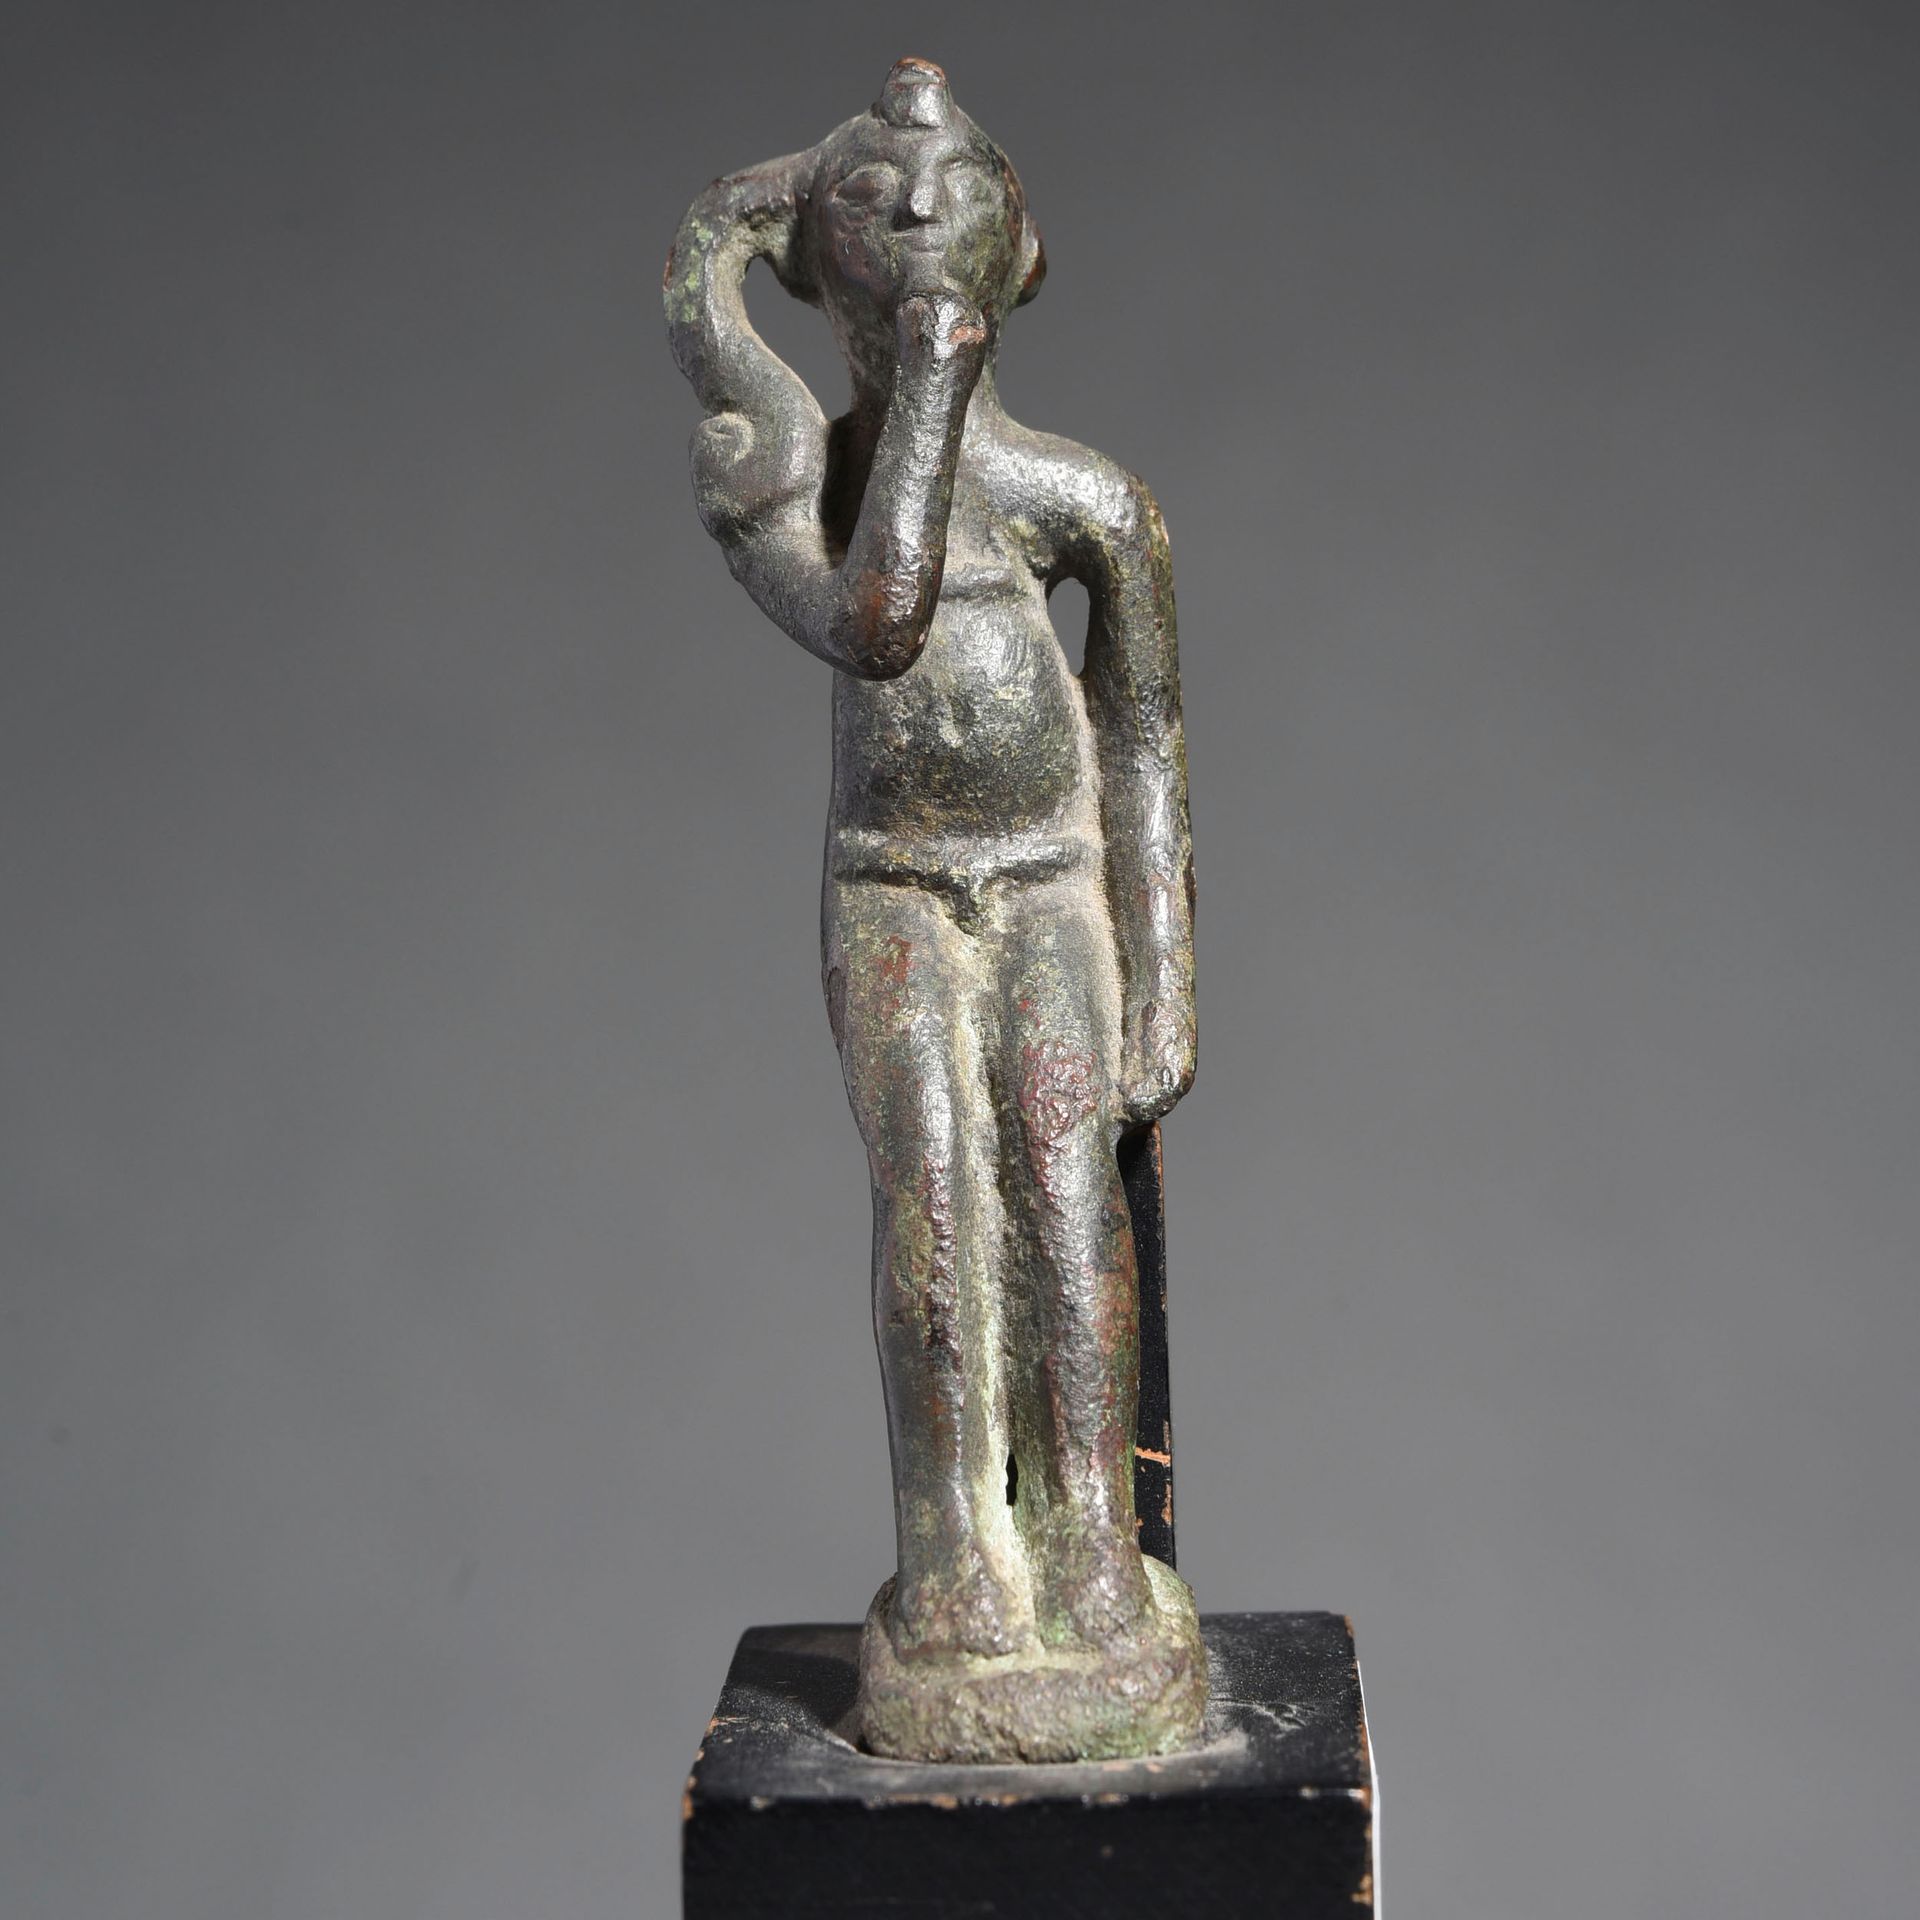 Null 哈波克拉底雕像

埃及，托勒密时期，公元前332-30年

由青铜制成。坐着的人物，手里拿着童年的灯芯和乌尔泰。

手指被带到嘴边。

H.8厘米

&hellip;